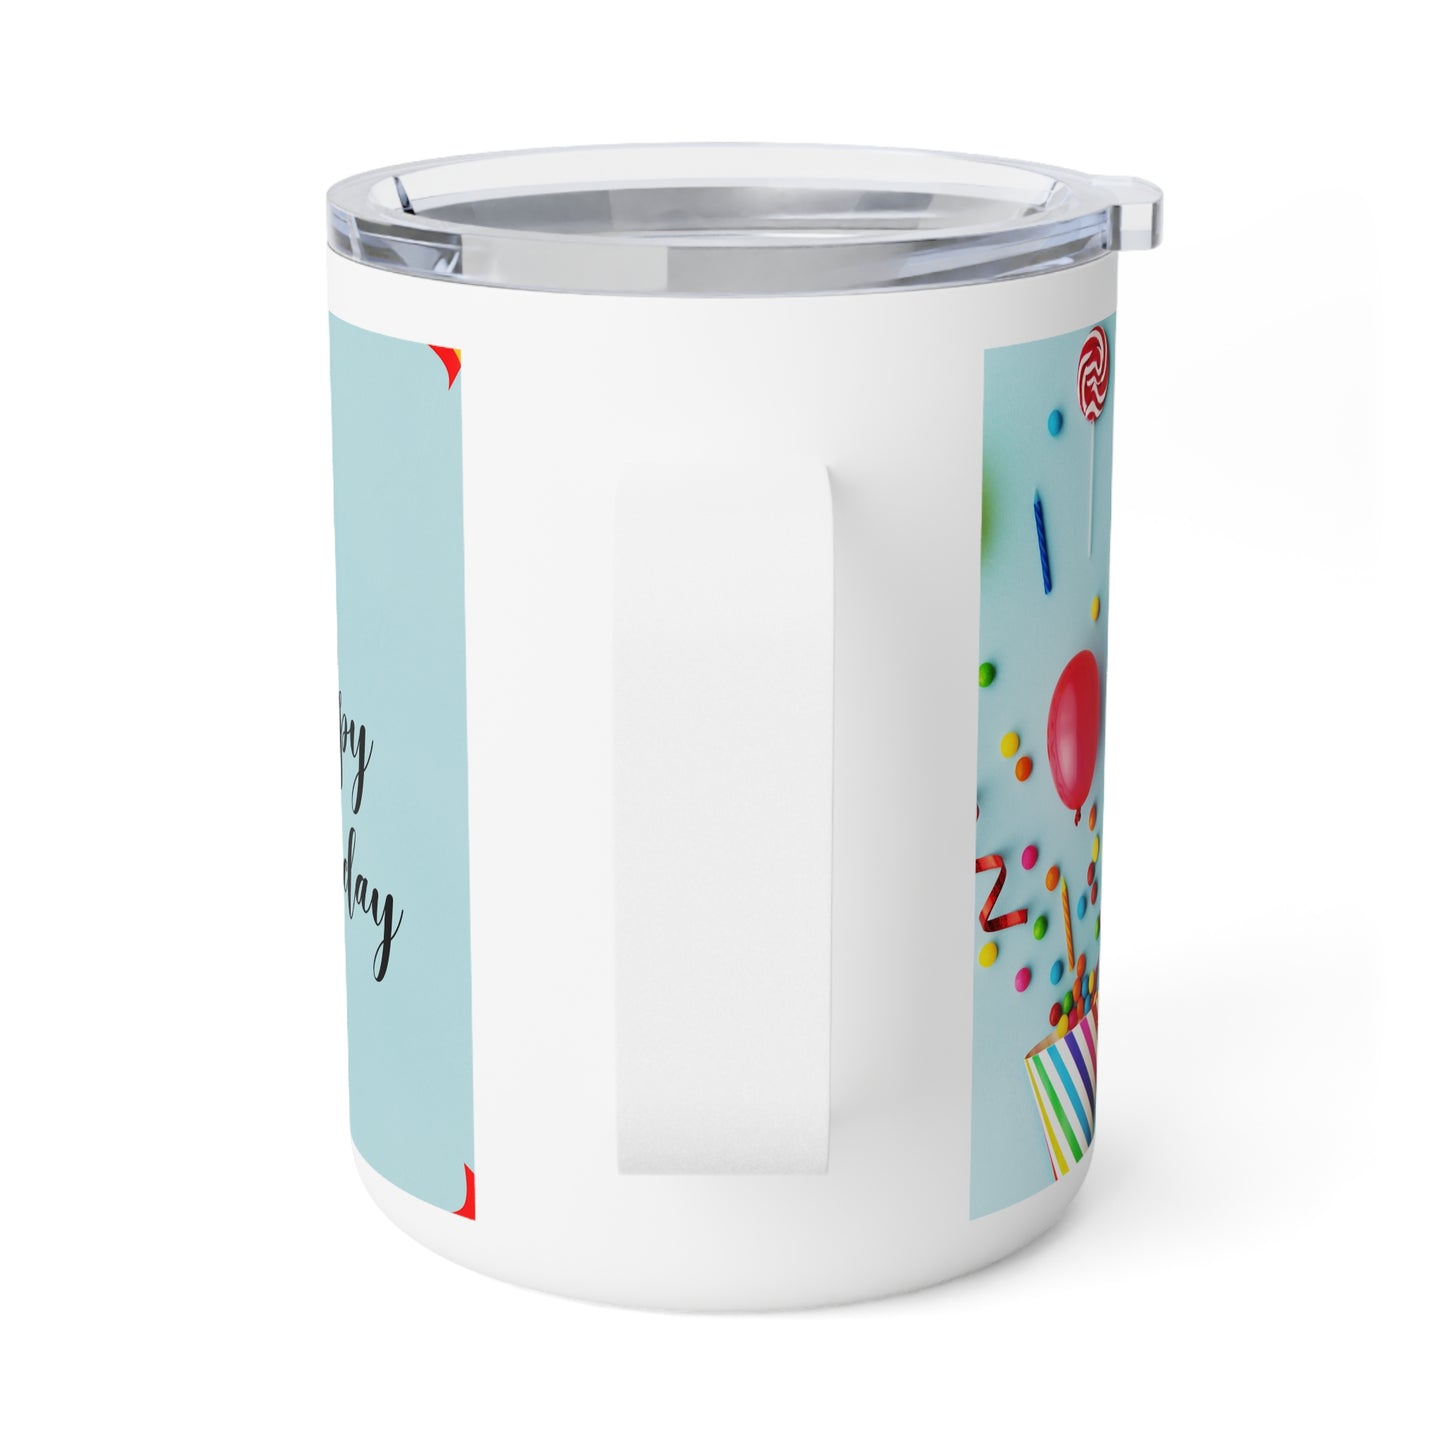 Happy Birthday Insulated Coffee Mugs 10 oz, Sky Blue